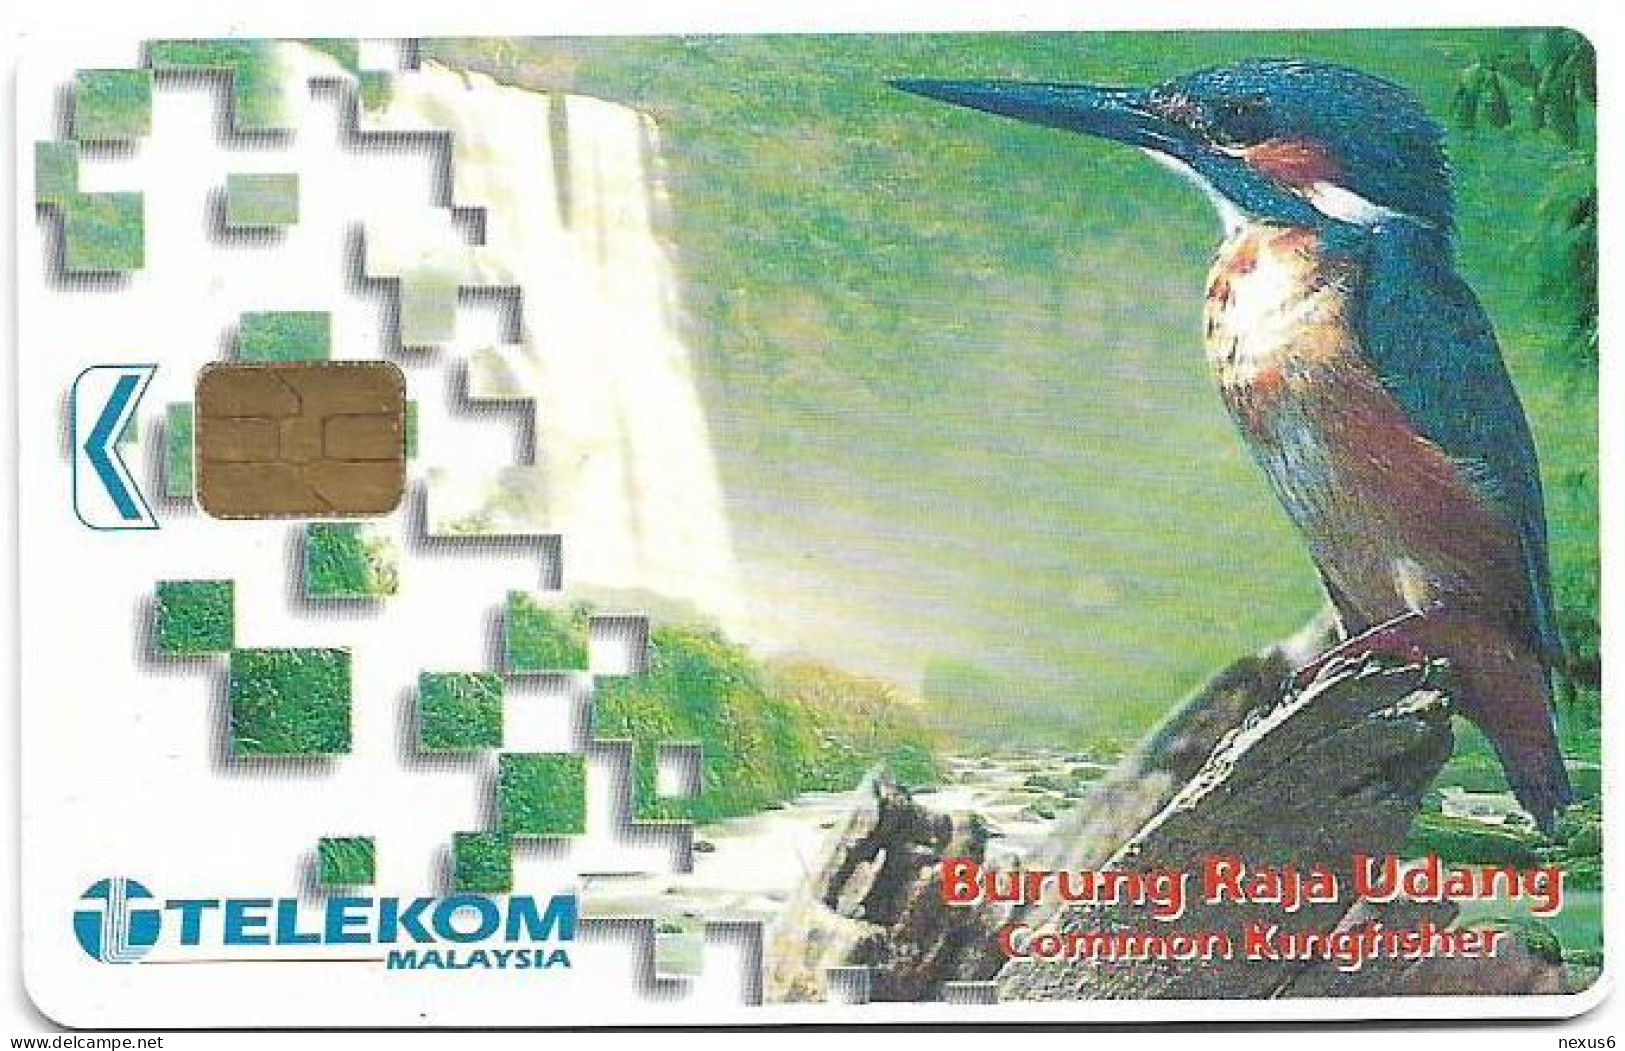 Malaysia - Telekom Malaysia (chip) - Birds - Burung Raja Udang, Chip Siemens S5, 10RM, Used - Malaysia